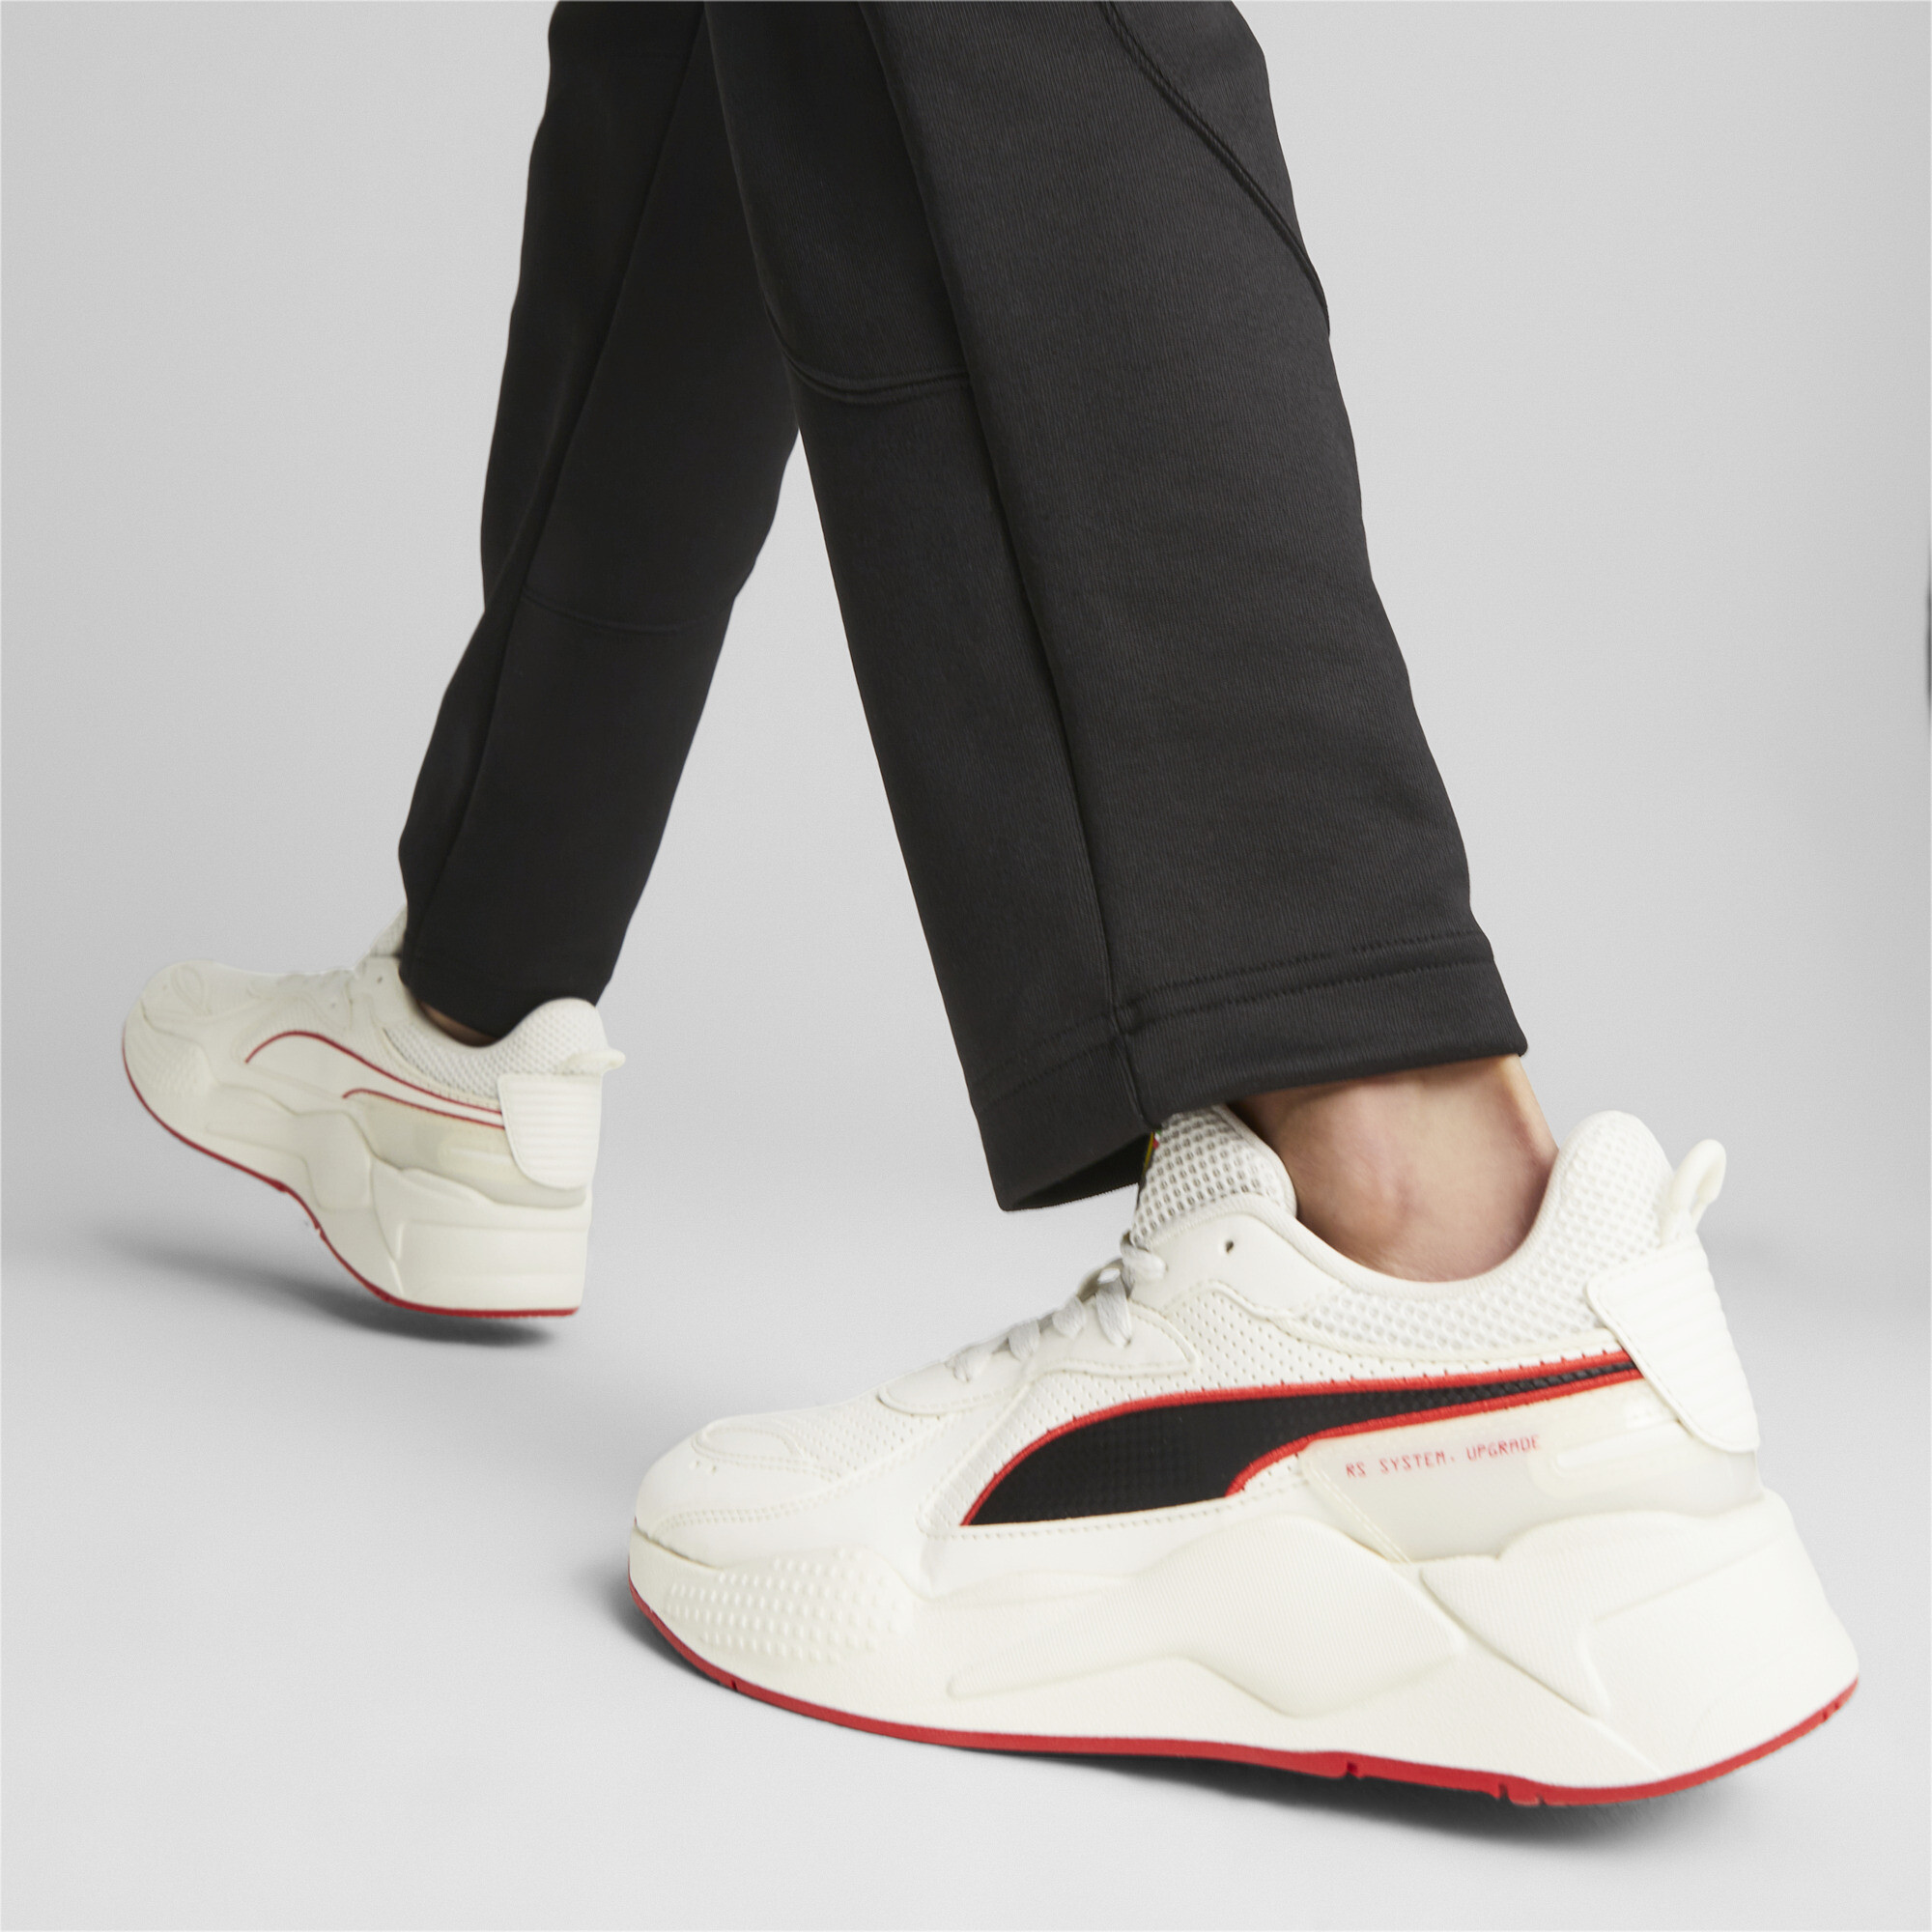 Men's Puma Scuderia Ferrari RS-X Sneakers, White, Size 37.5, Shoes